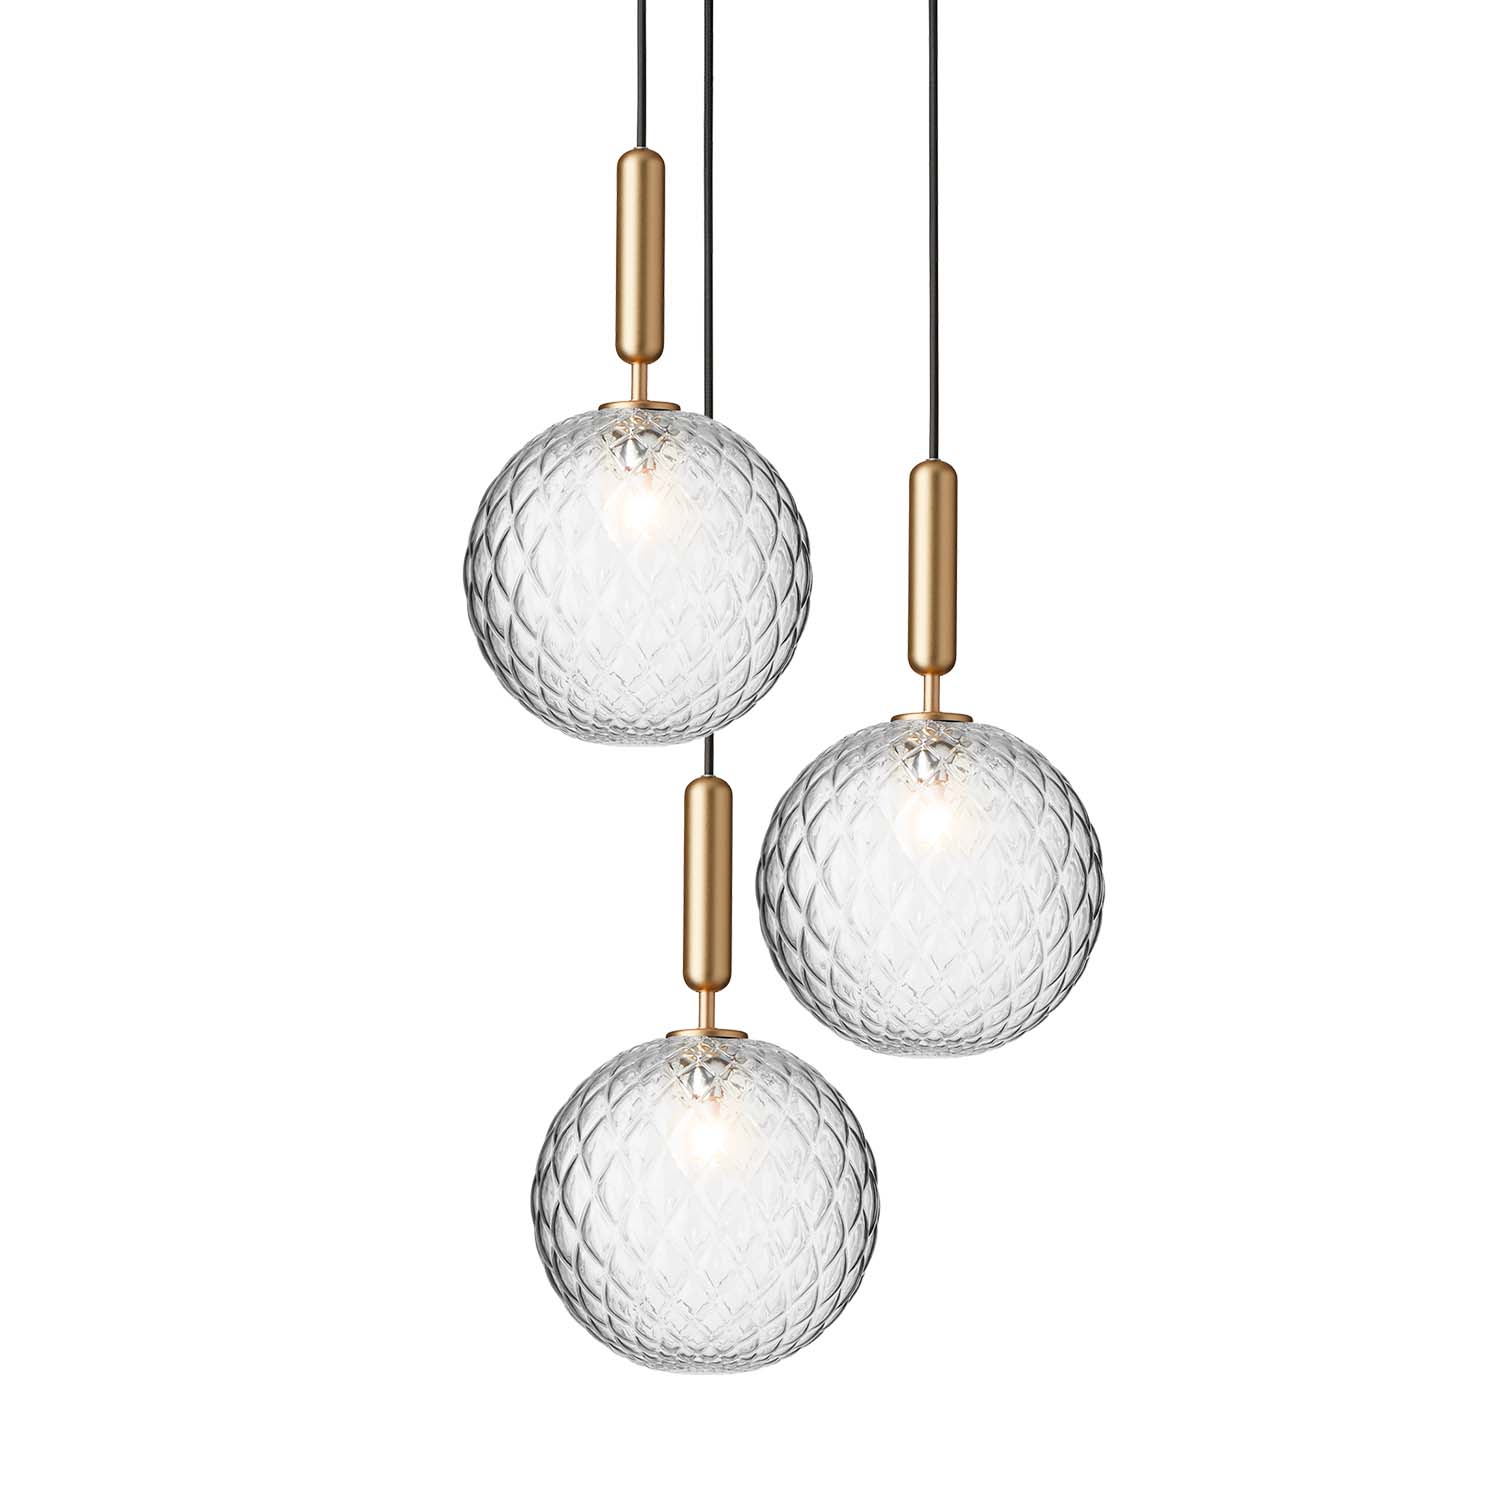 MIIRA 3 Optic - Elegant high-end pendant lamp, living room or kitchen